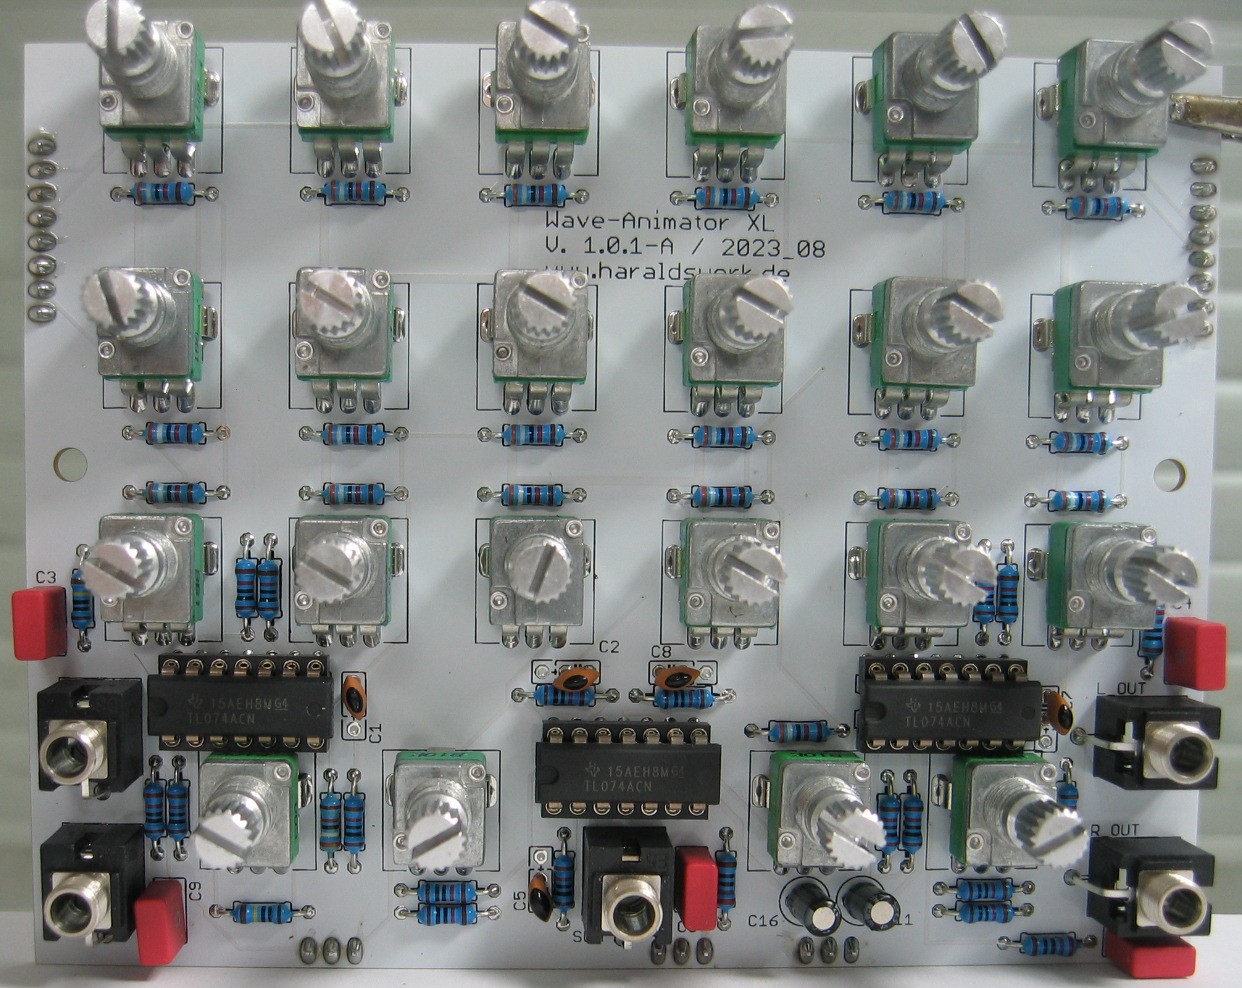 Multi Phase Waveform Animator populated control PCB